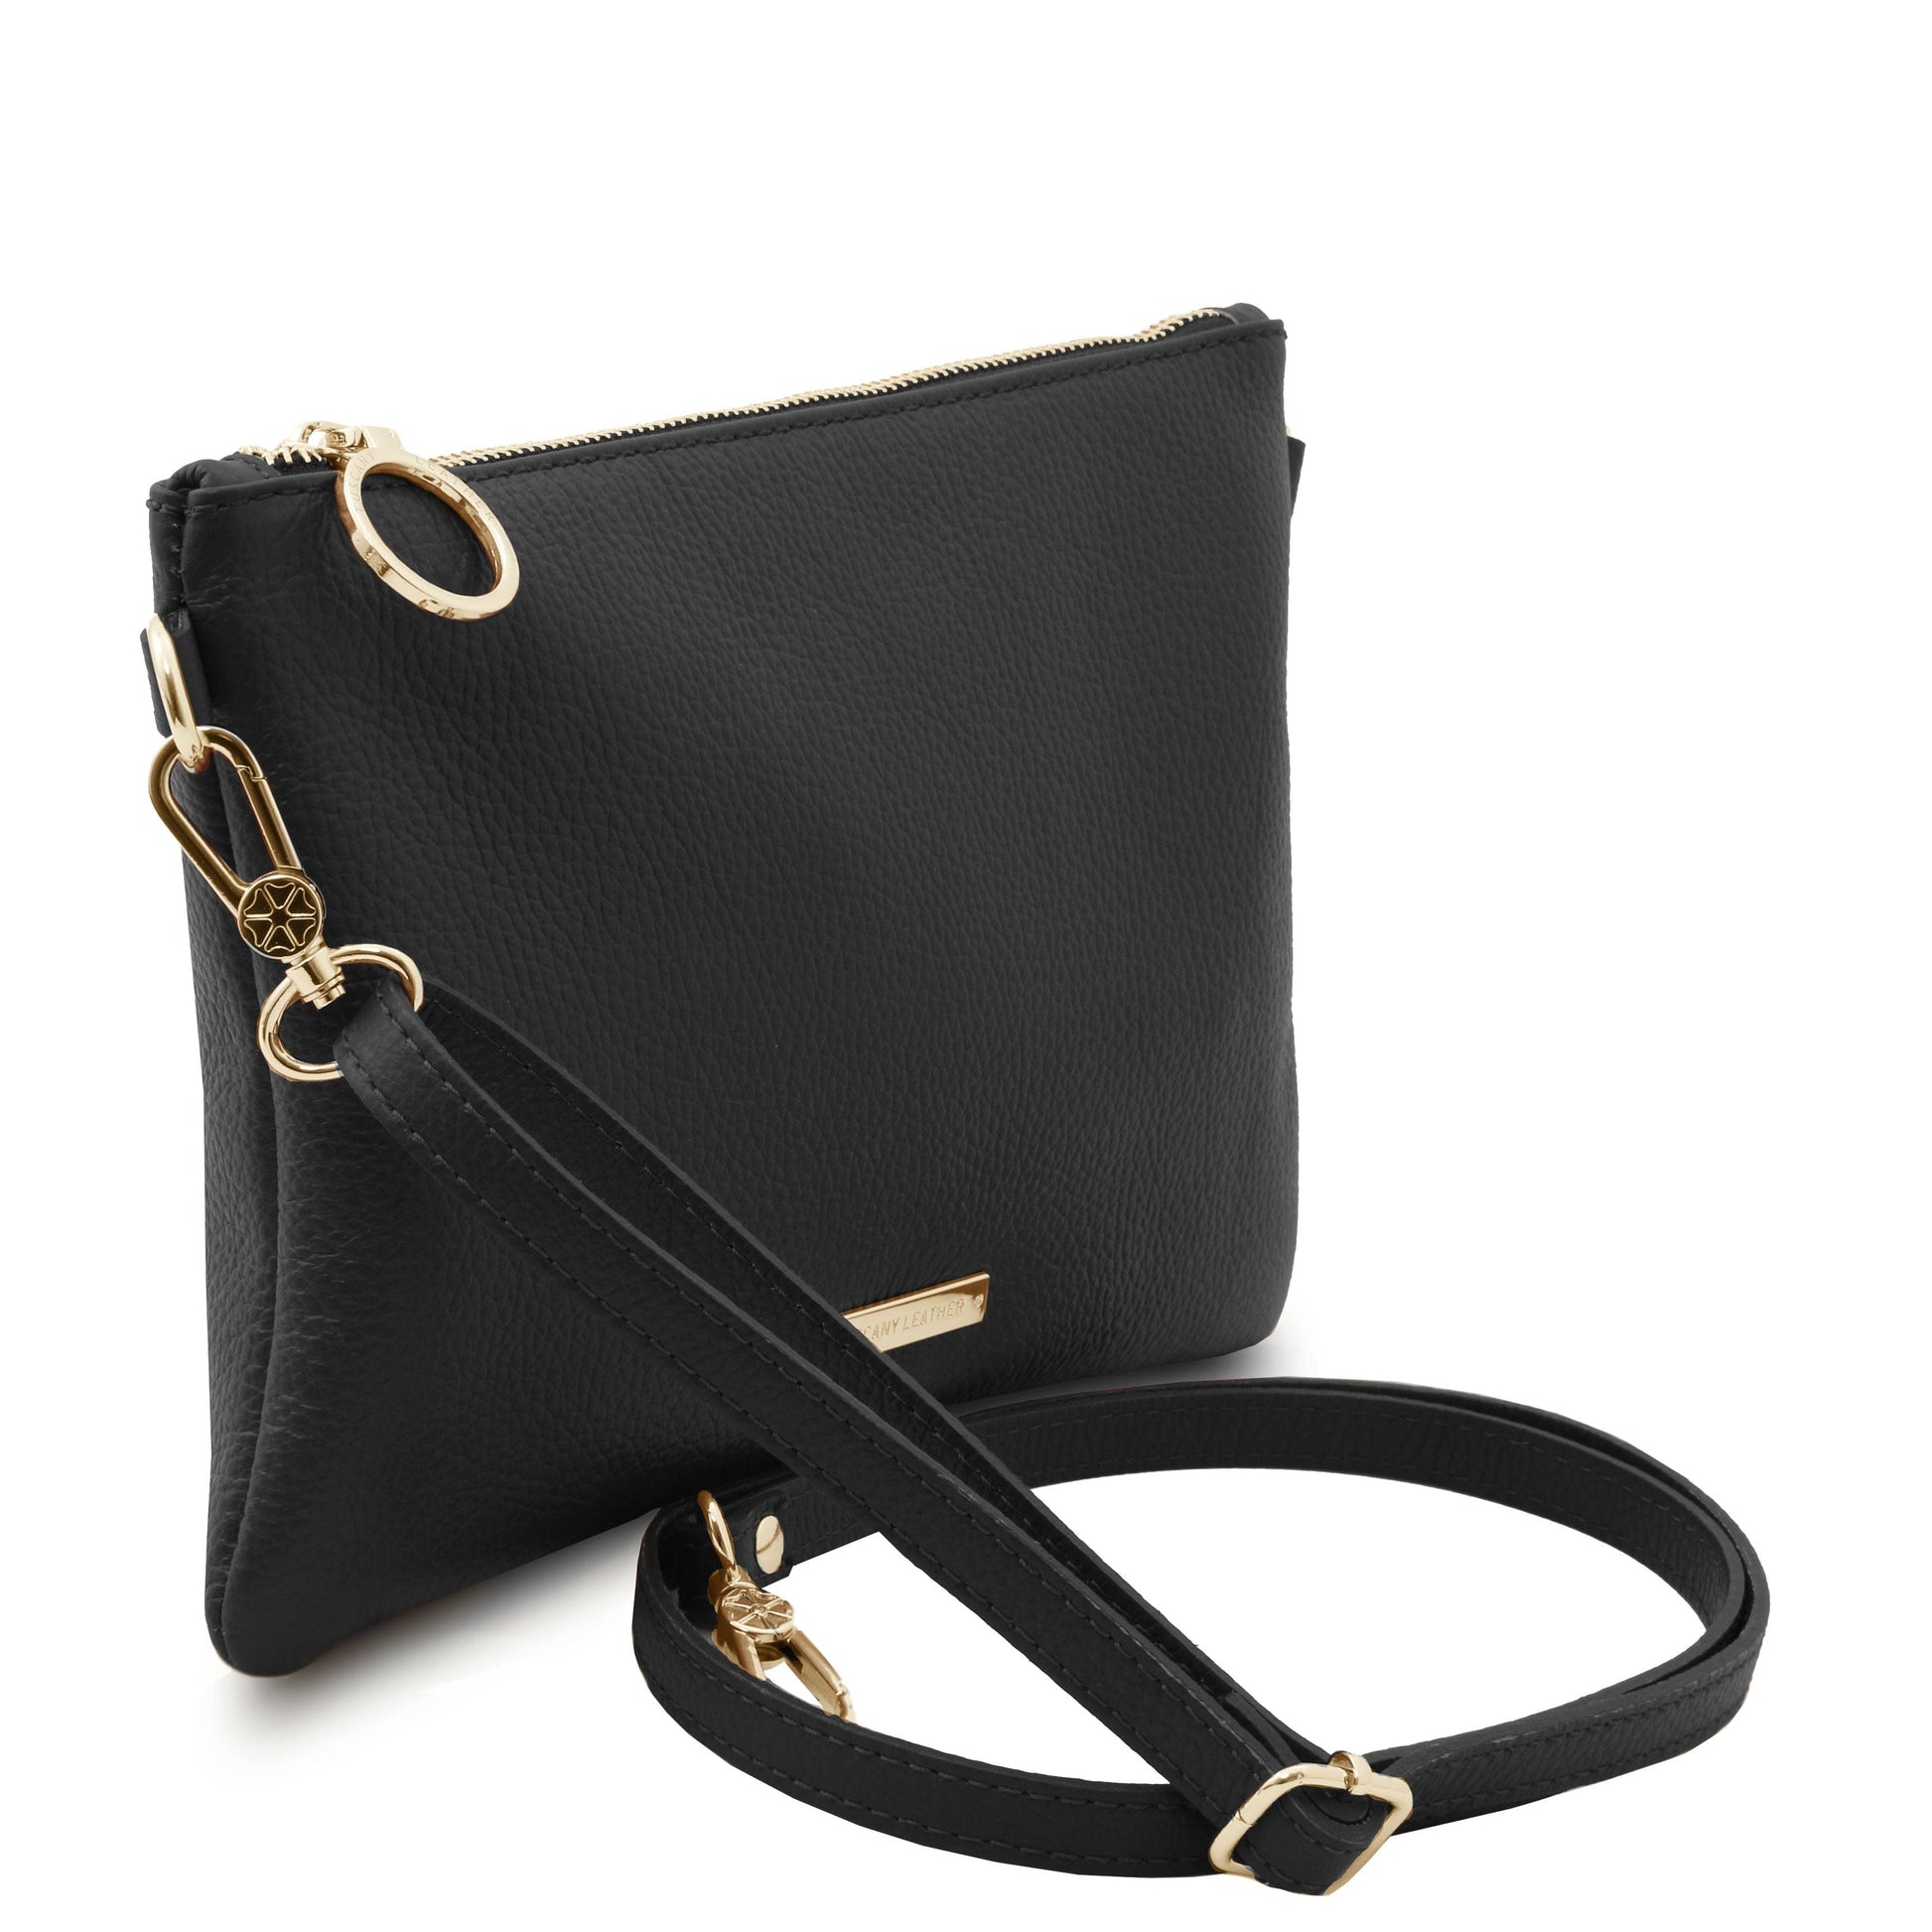 TL Bag - Soft leather clutch | TL142029 - Premium Leather handbags - Shop now at San Rocco Italia